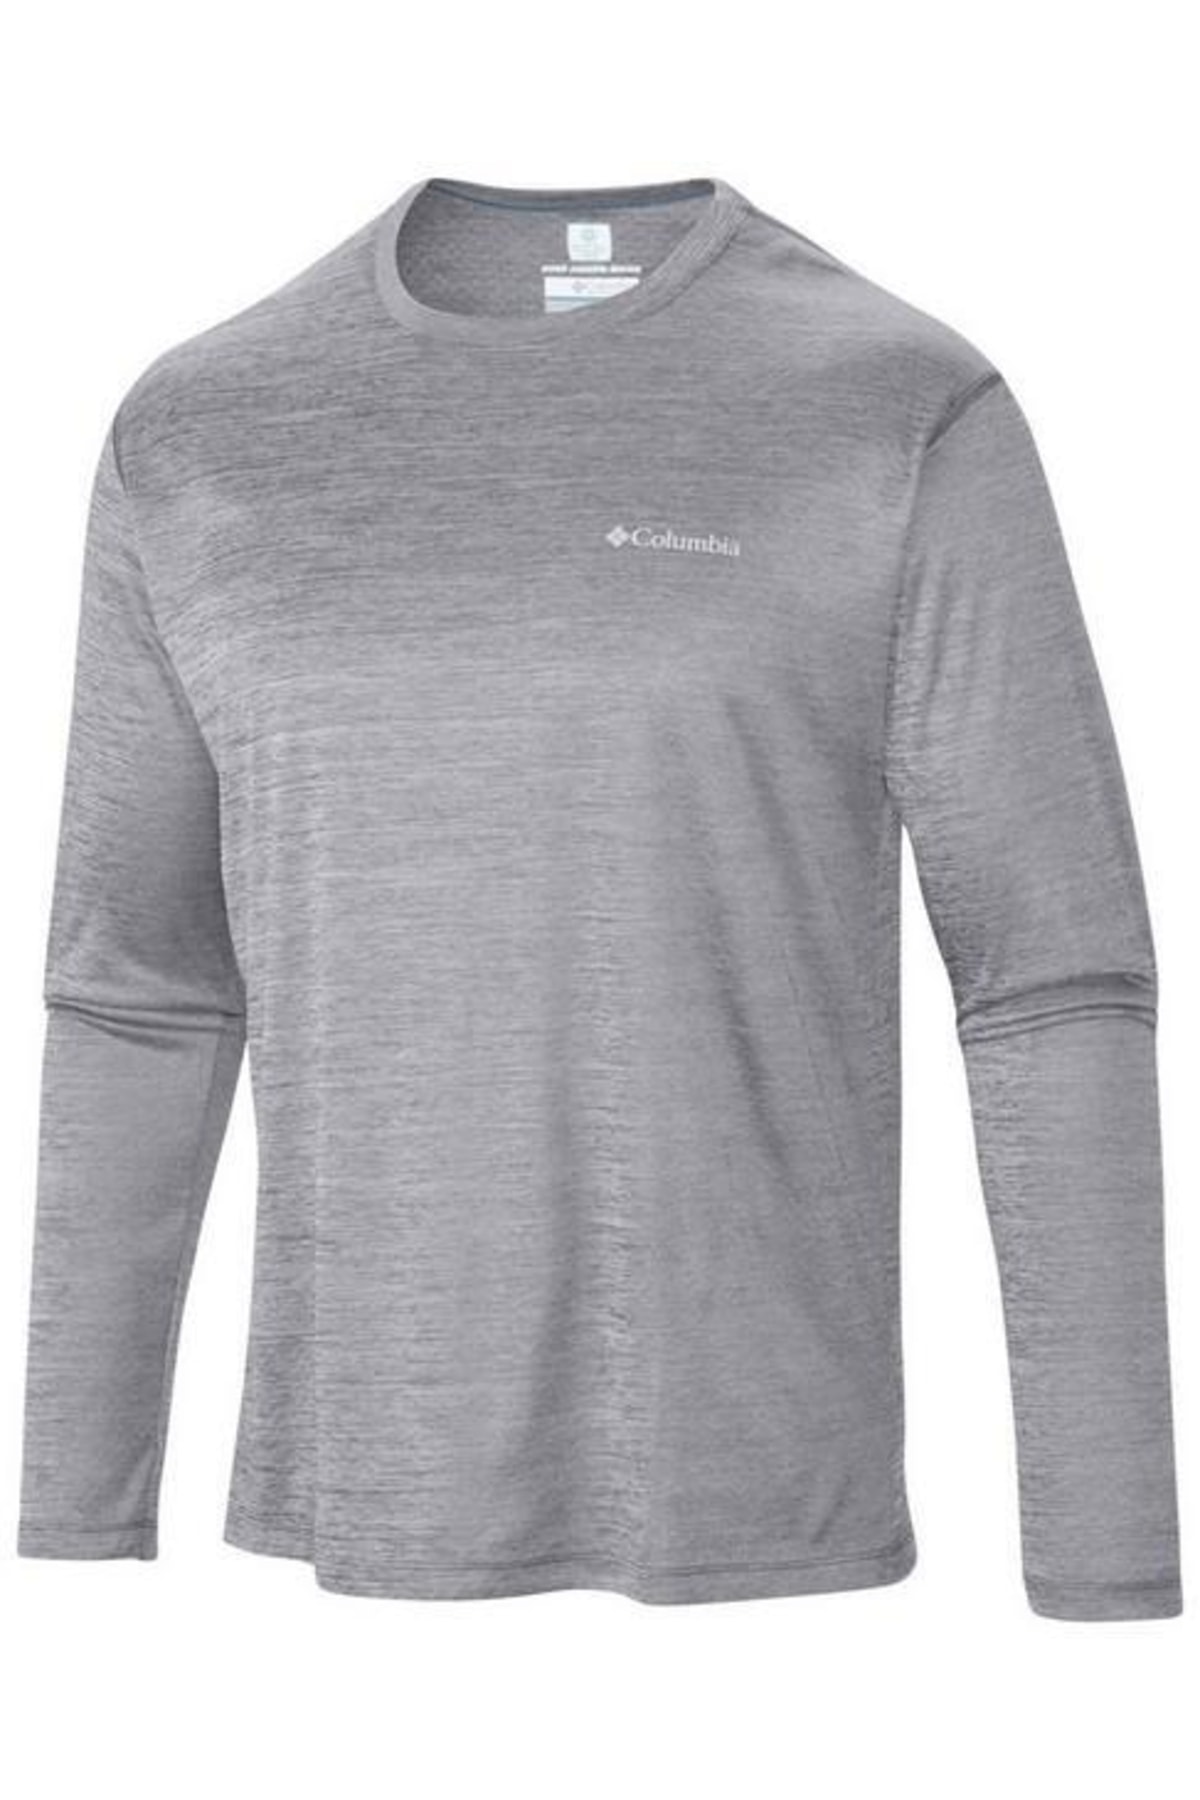 Columbia Zero Ruleslong Sleeve Shirt Erkek Sweatshirt Am6083-039